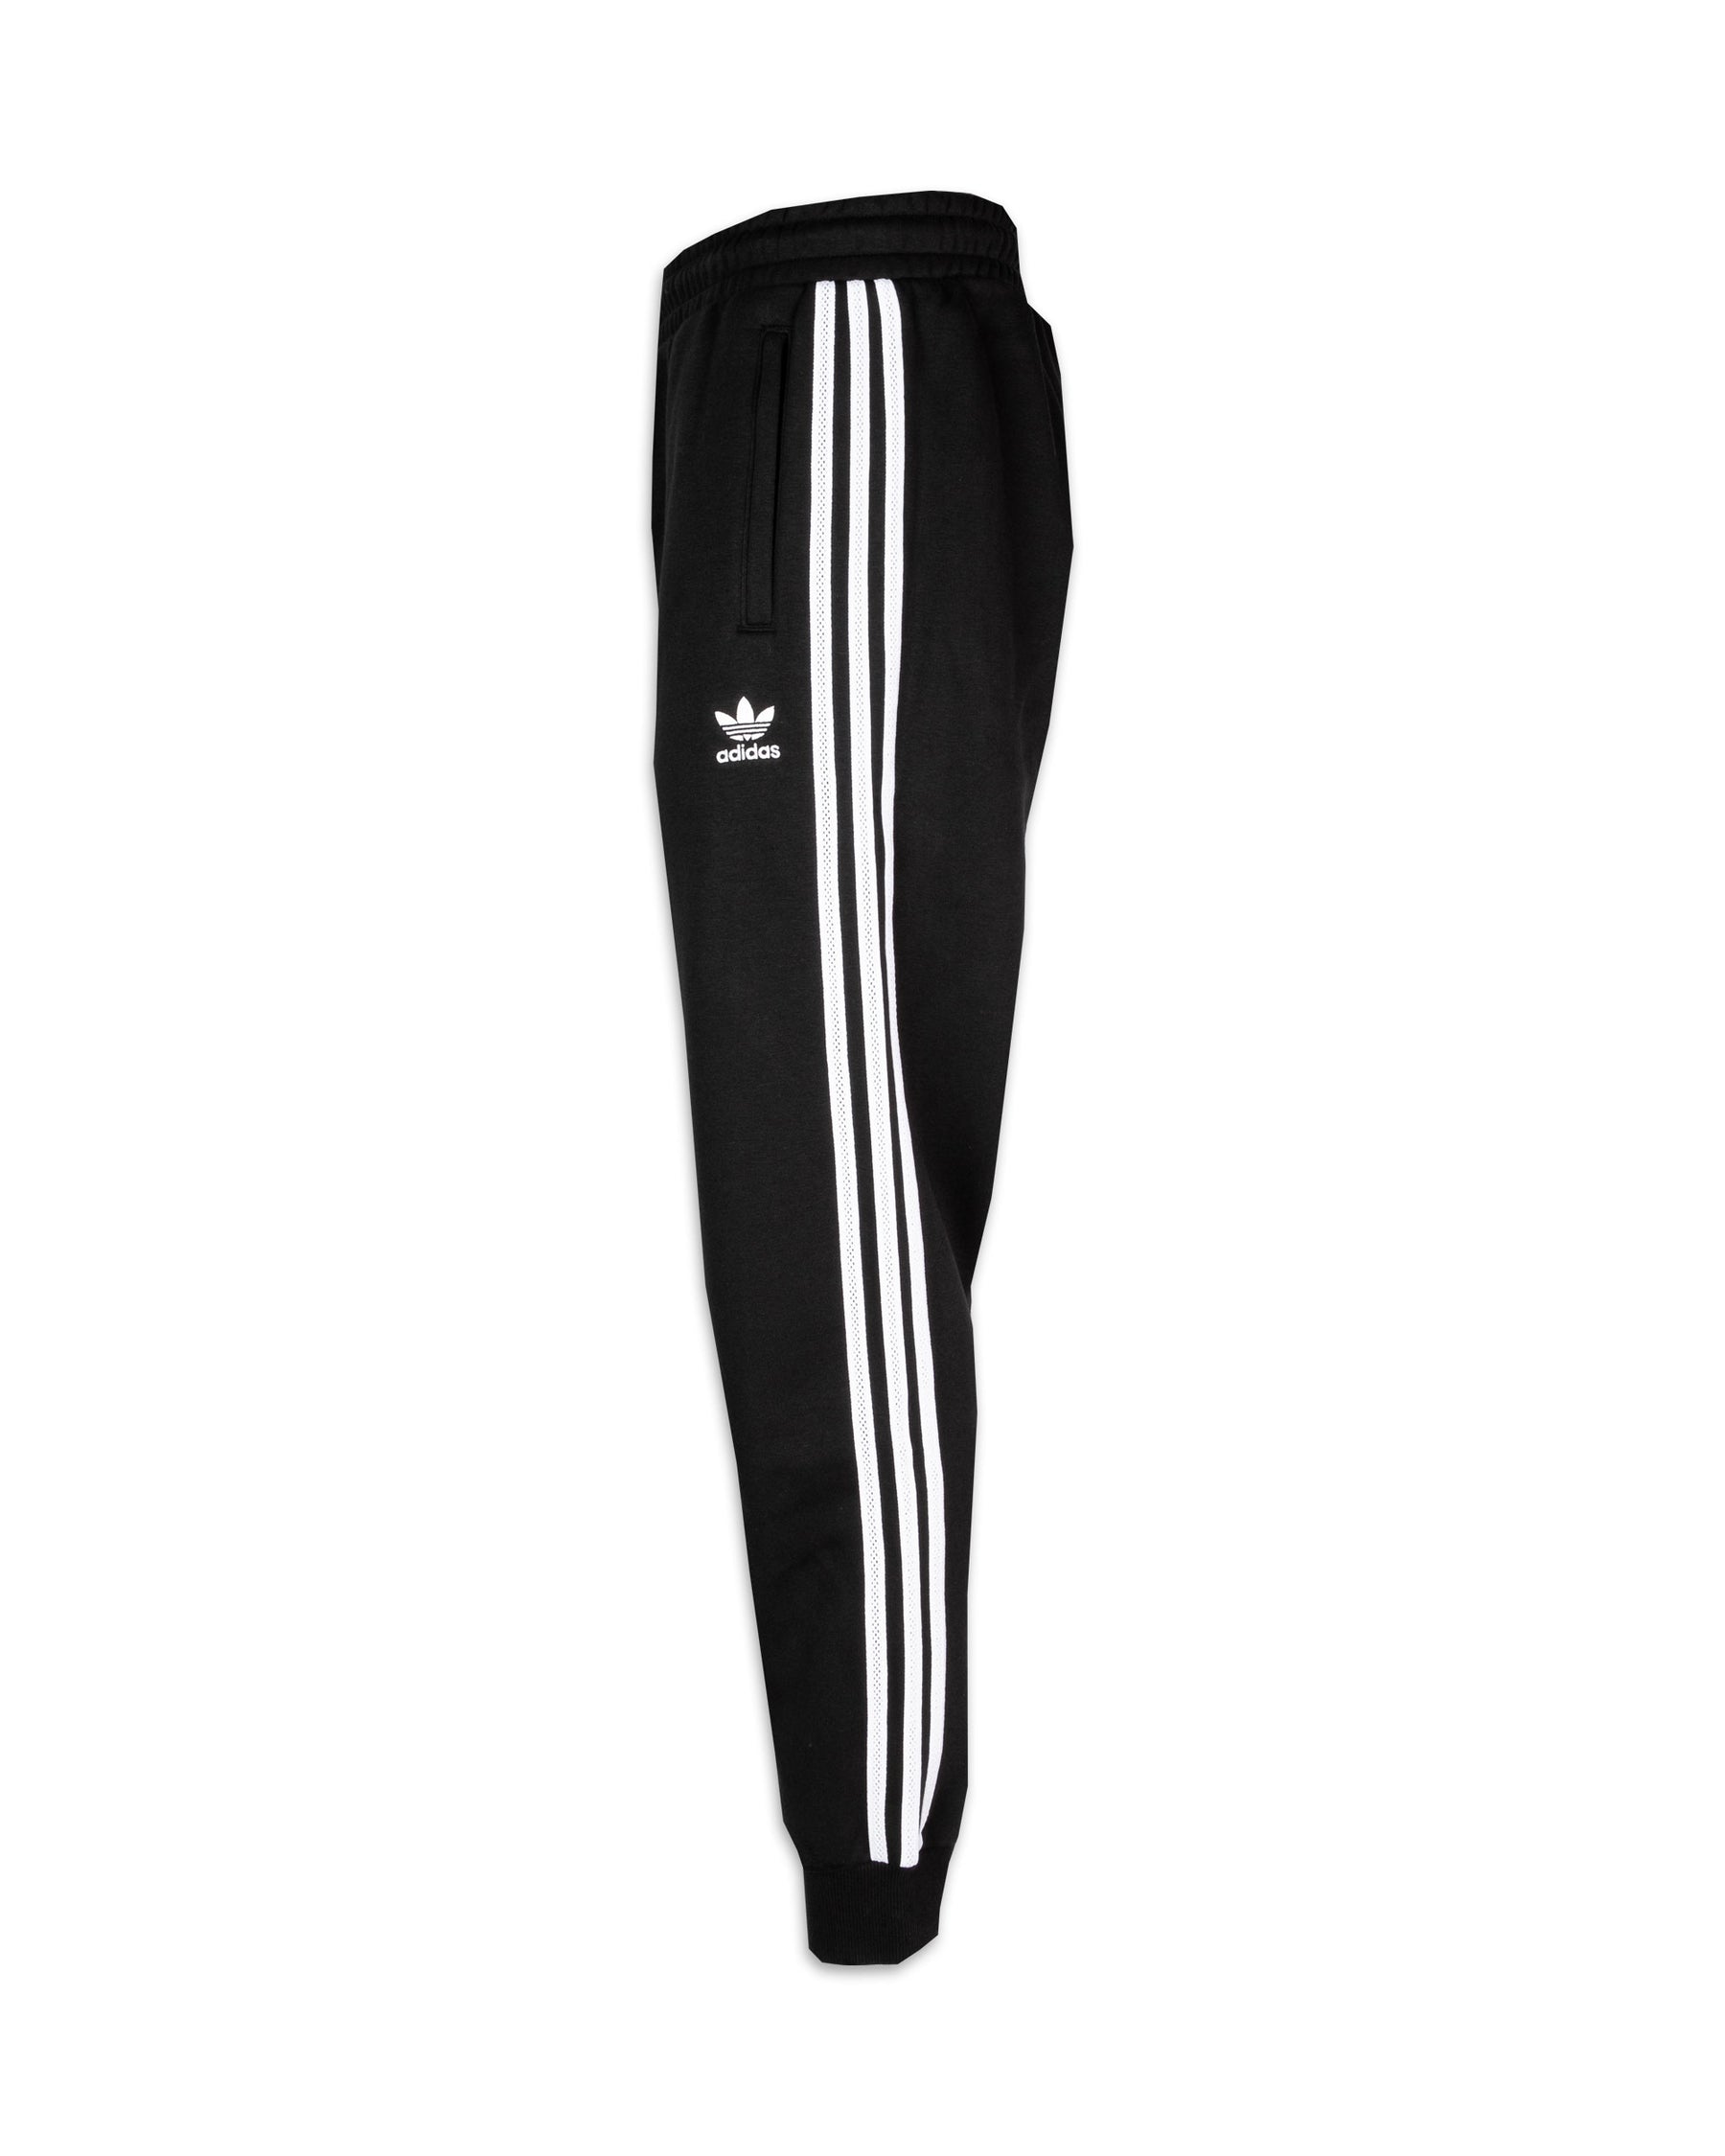 Man Pant Adidas Originals 3 Stripe Black